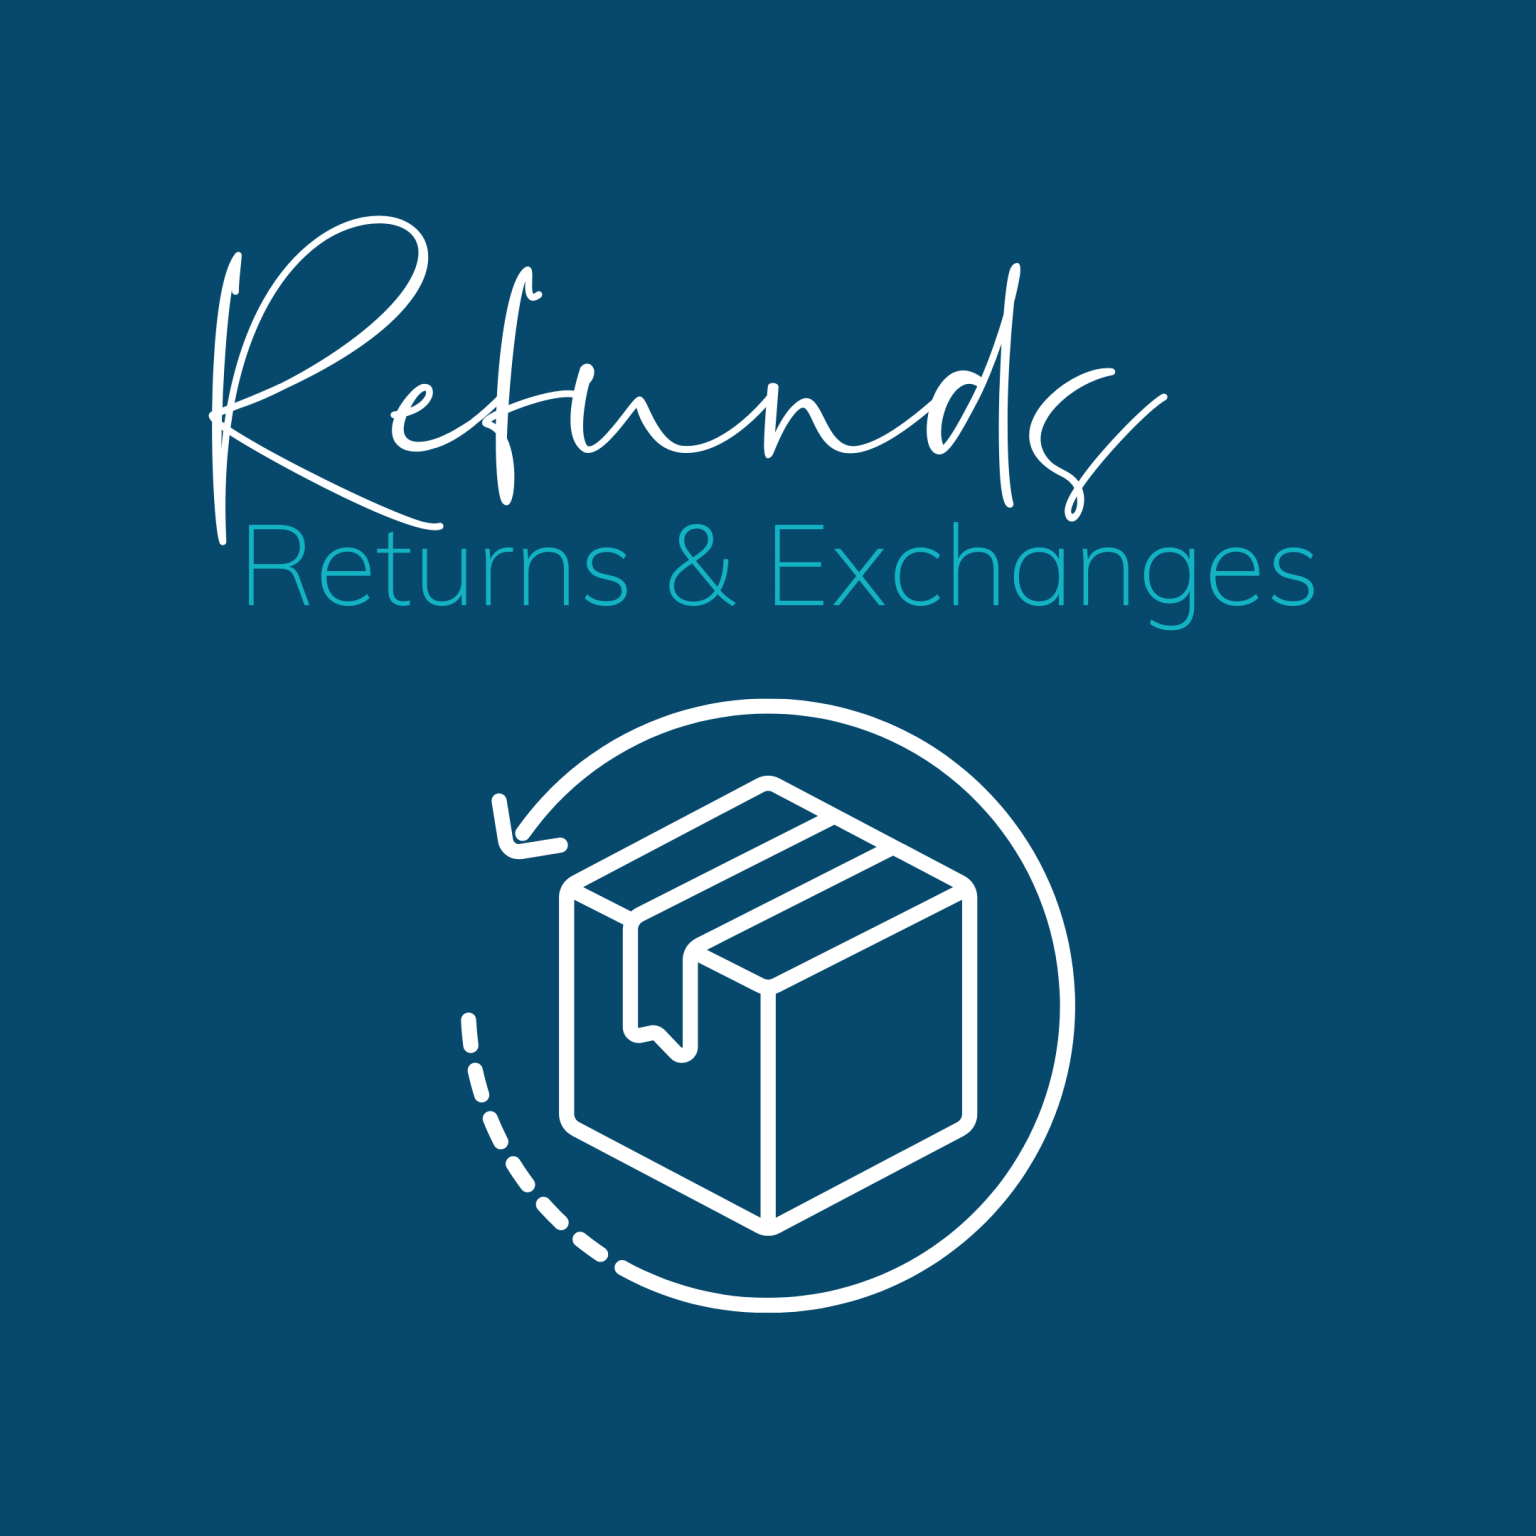 Rebecca Jane Singh Design Refunds Returns & Exchanges